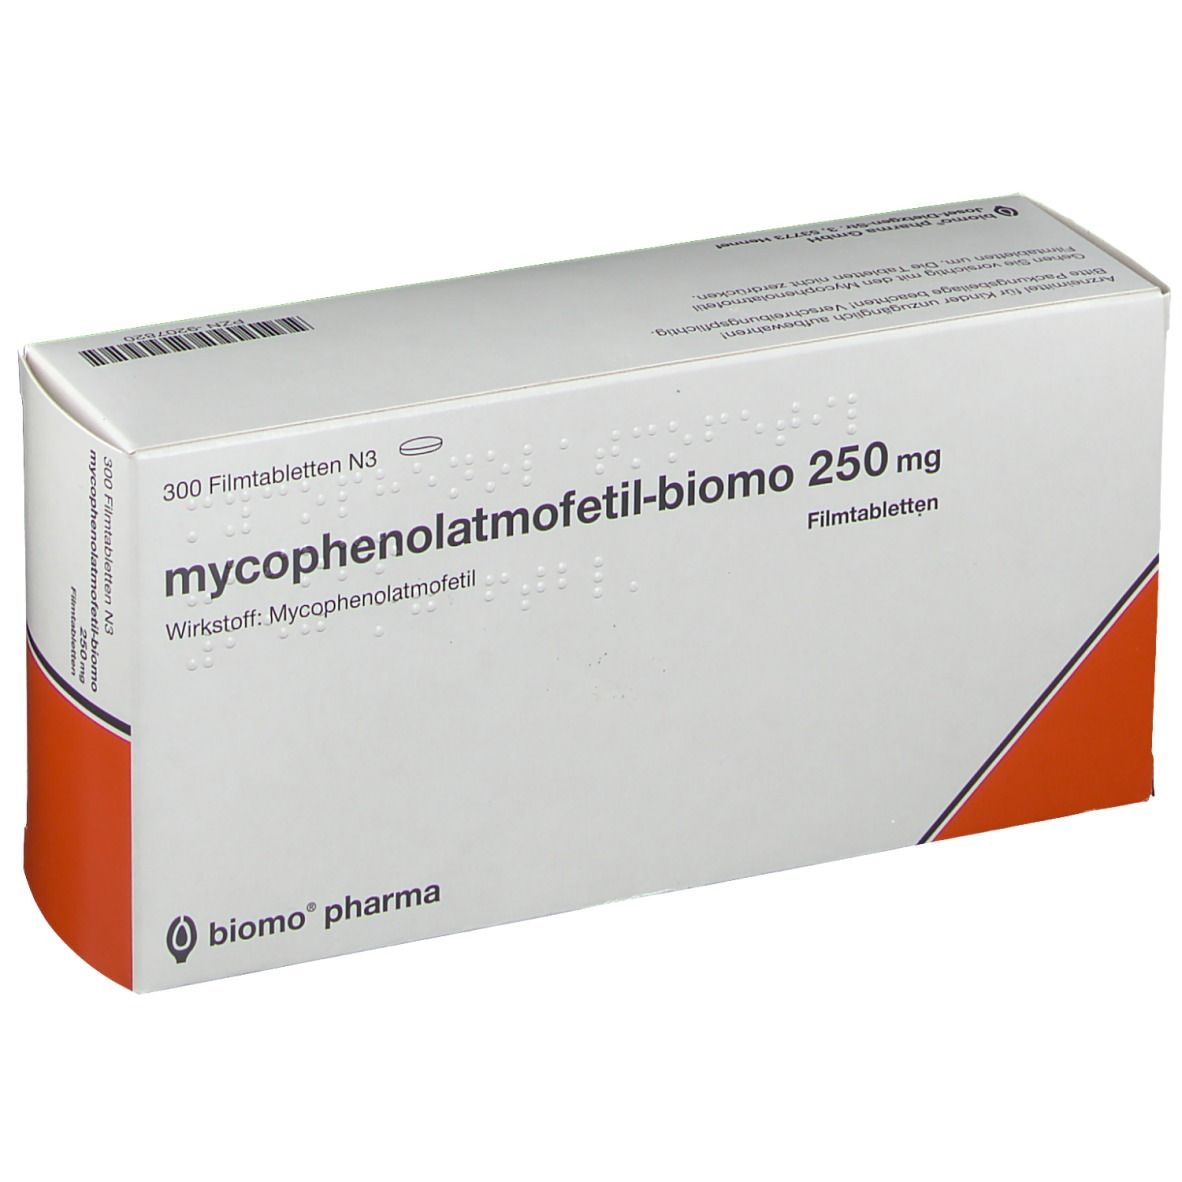 mycophenolatmofitel-biomo® 250 mg